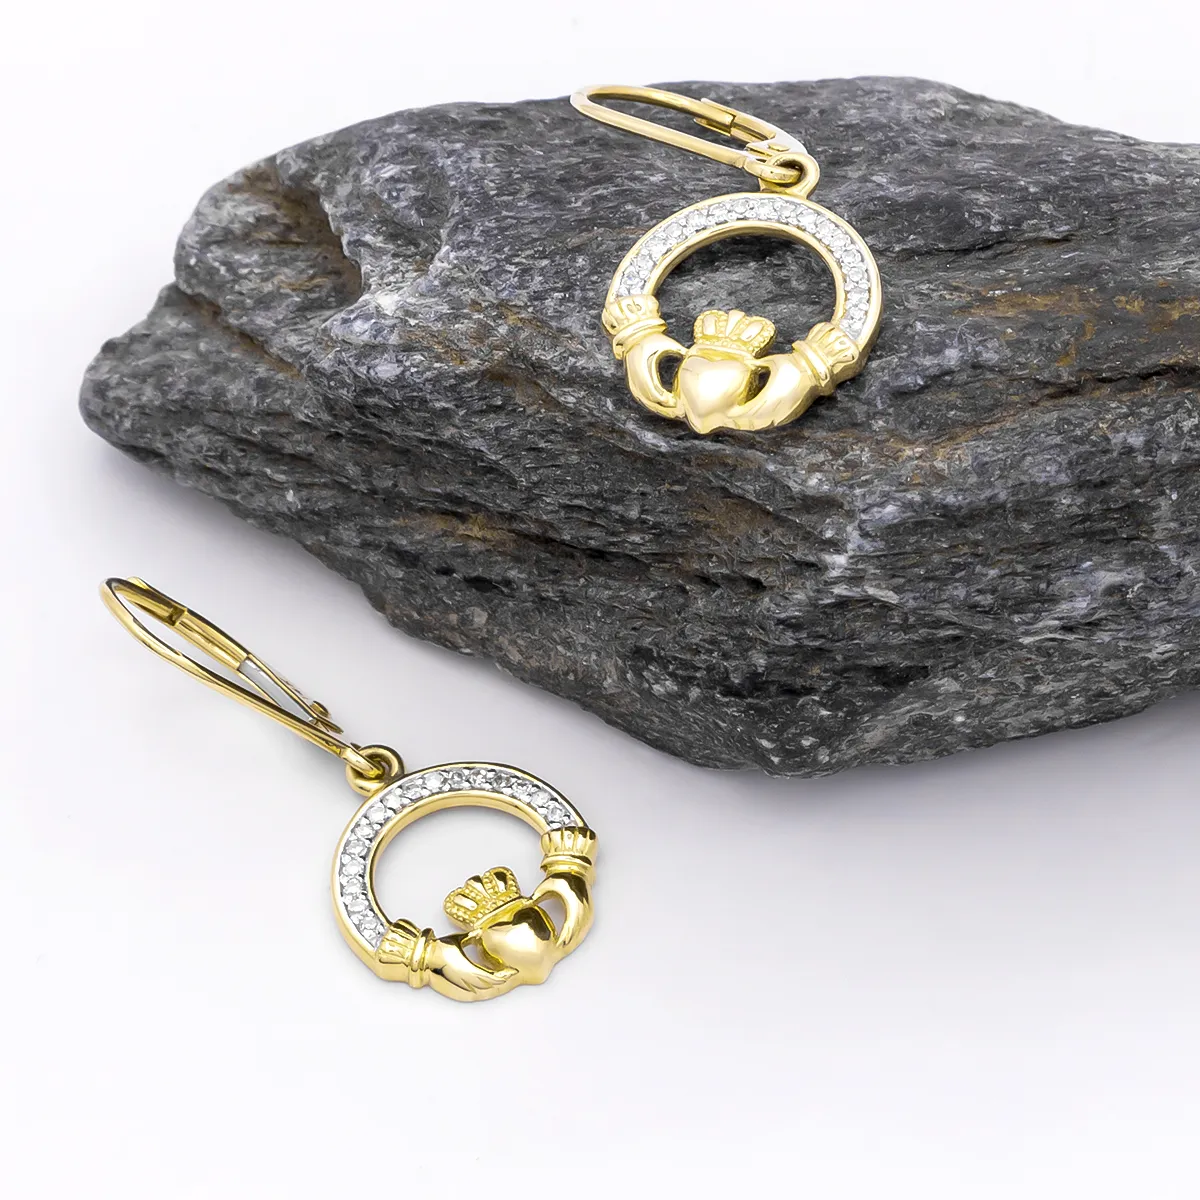 14K Gold Diamond Set Claddagh Earrings